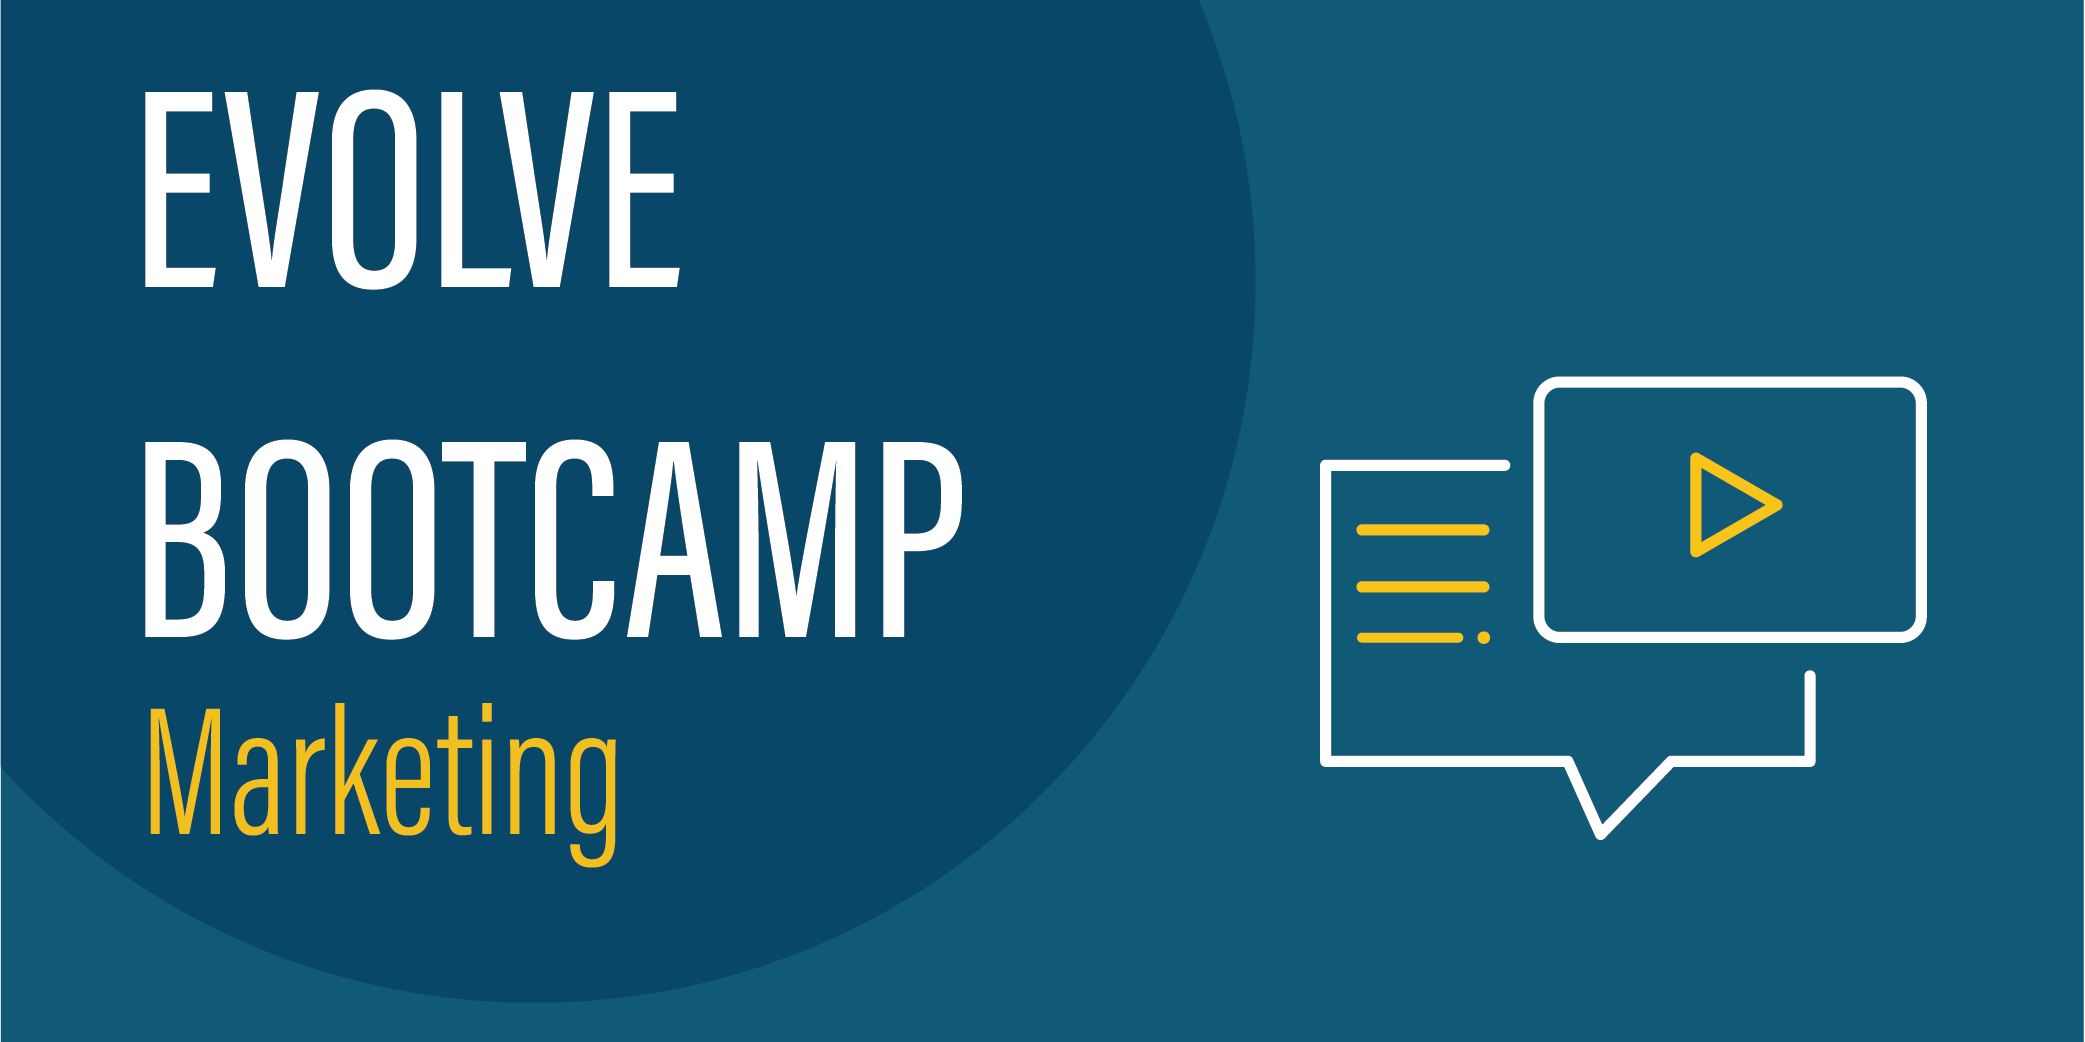 Evolve Bootcamp Marketing